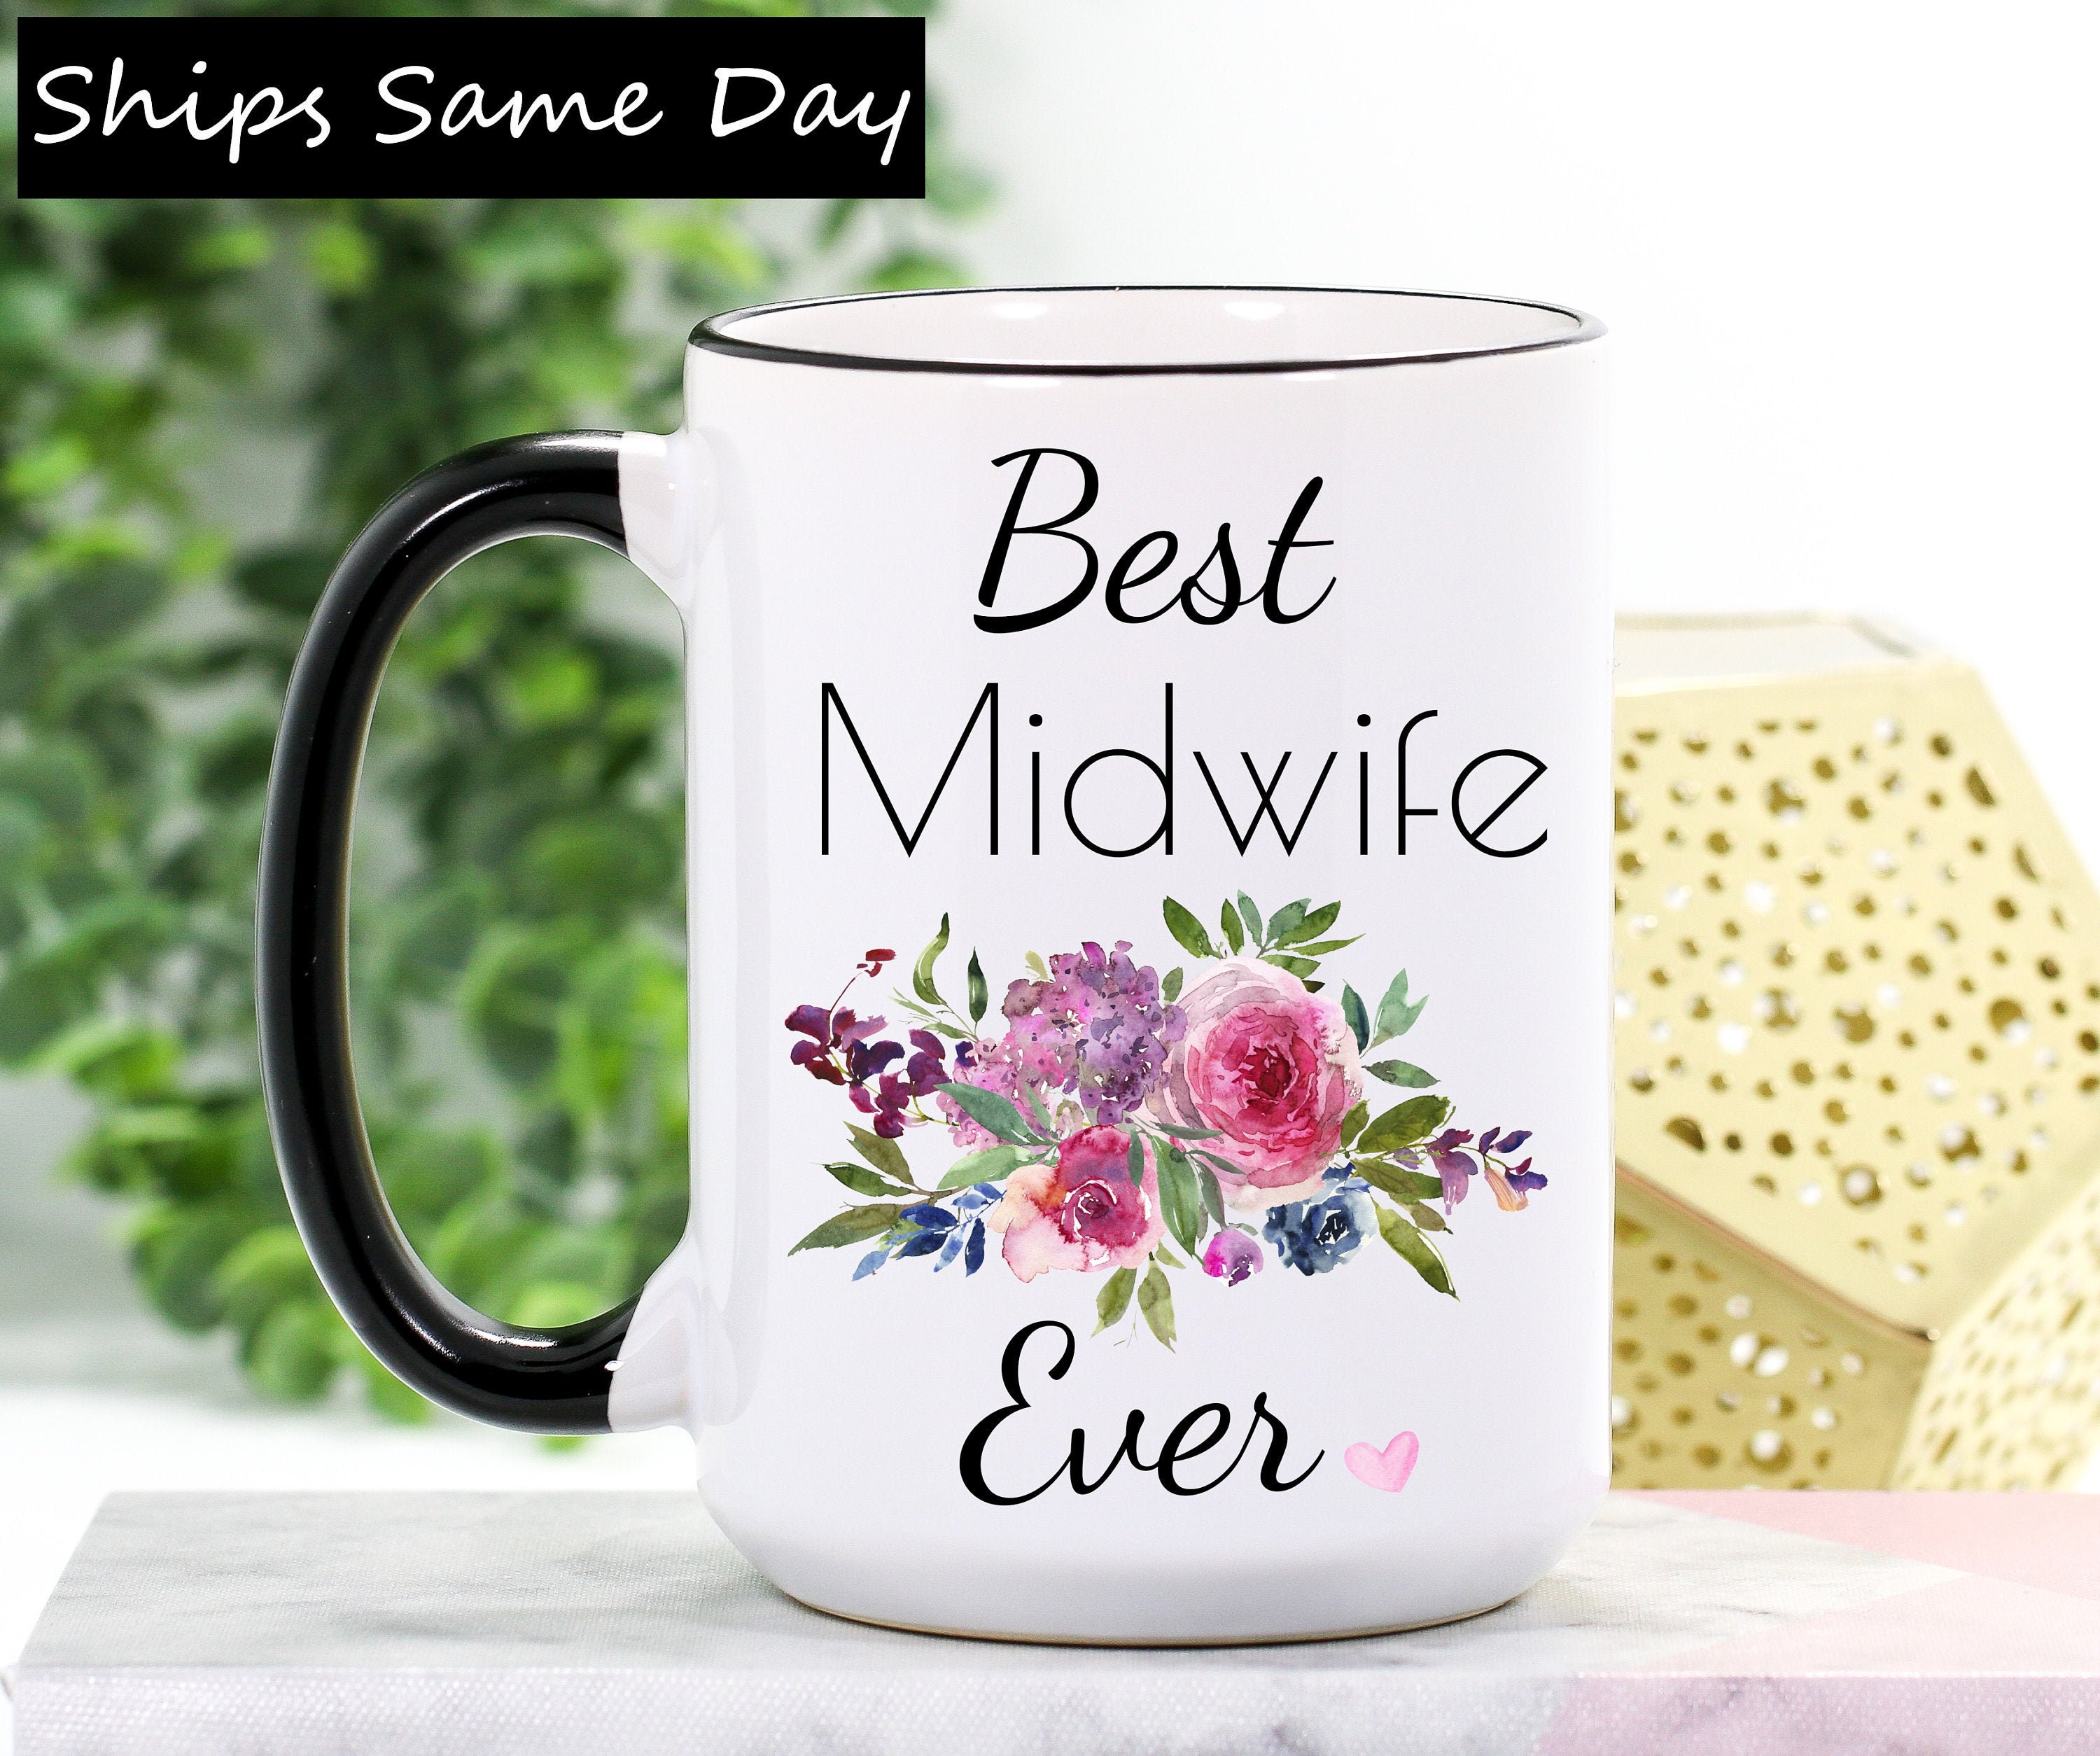 Midwife Mug Midwife Gifts Midwife Coffee Mug Best